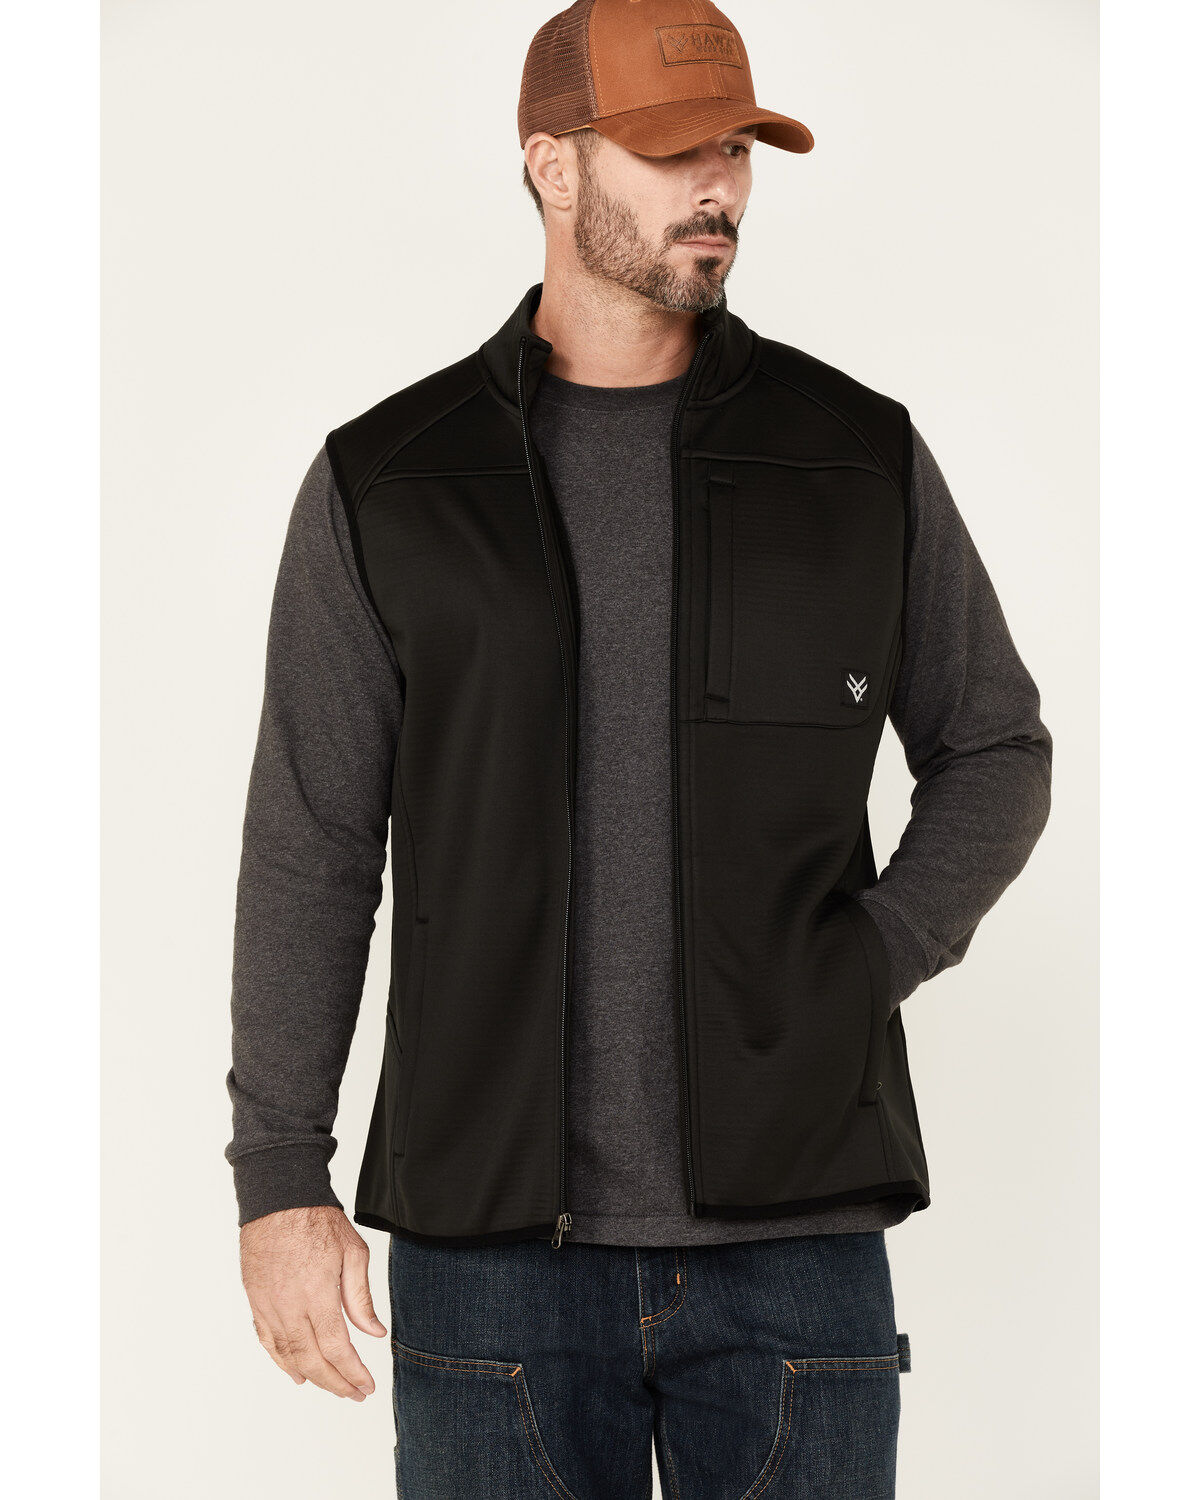 Solid Patchwork Zipper Long Sleeve Pockets Casual Sport Outdoor Work Windbreaker Coat Tops KASAAS Mens Jackets 